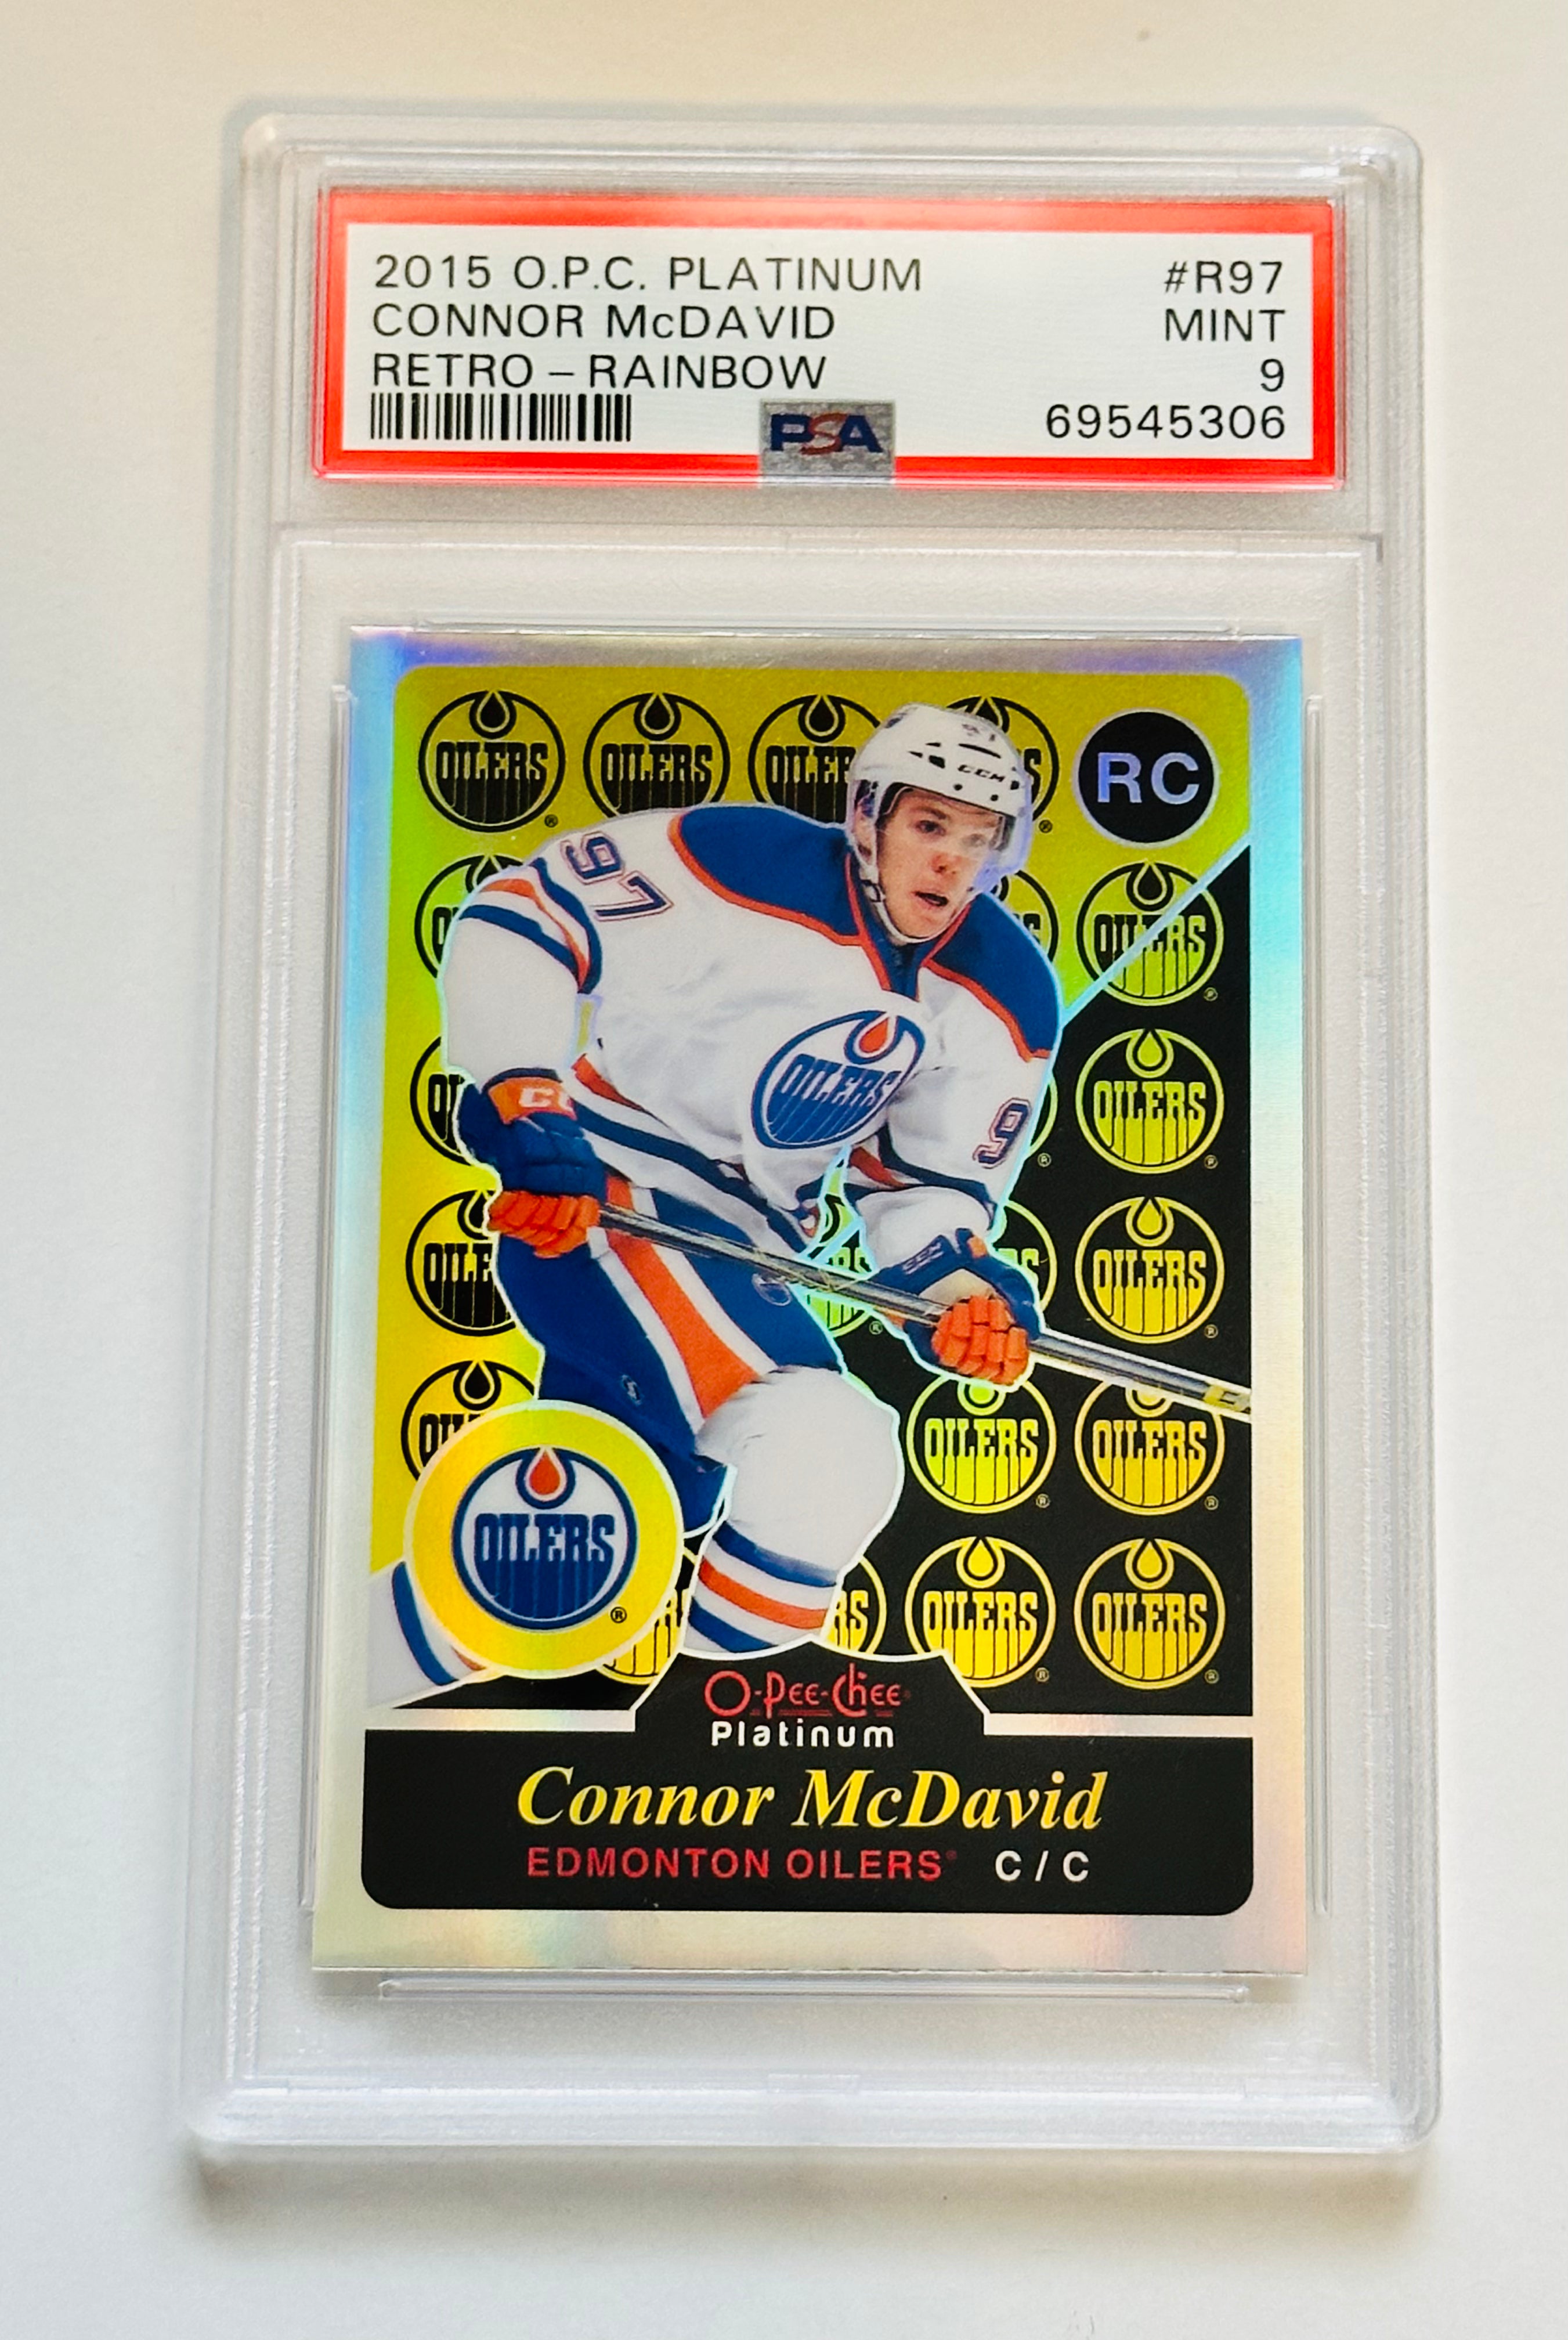 Connor McDavid Opc Platinum Retro Rainbow PSA 9 rookie hockey card 2015